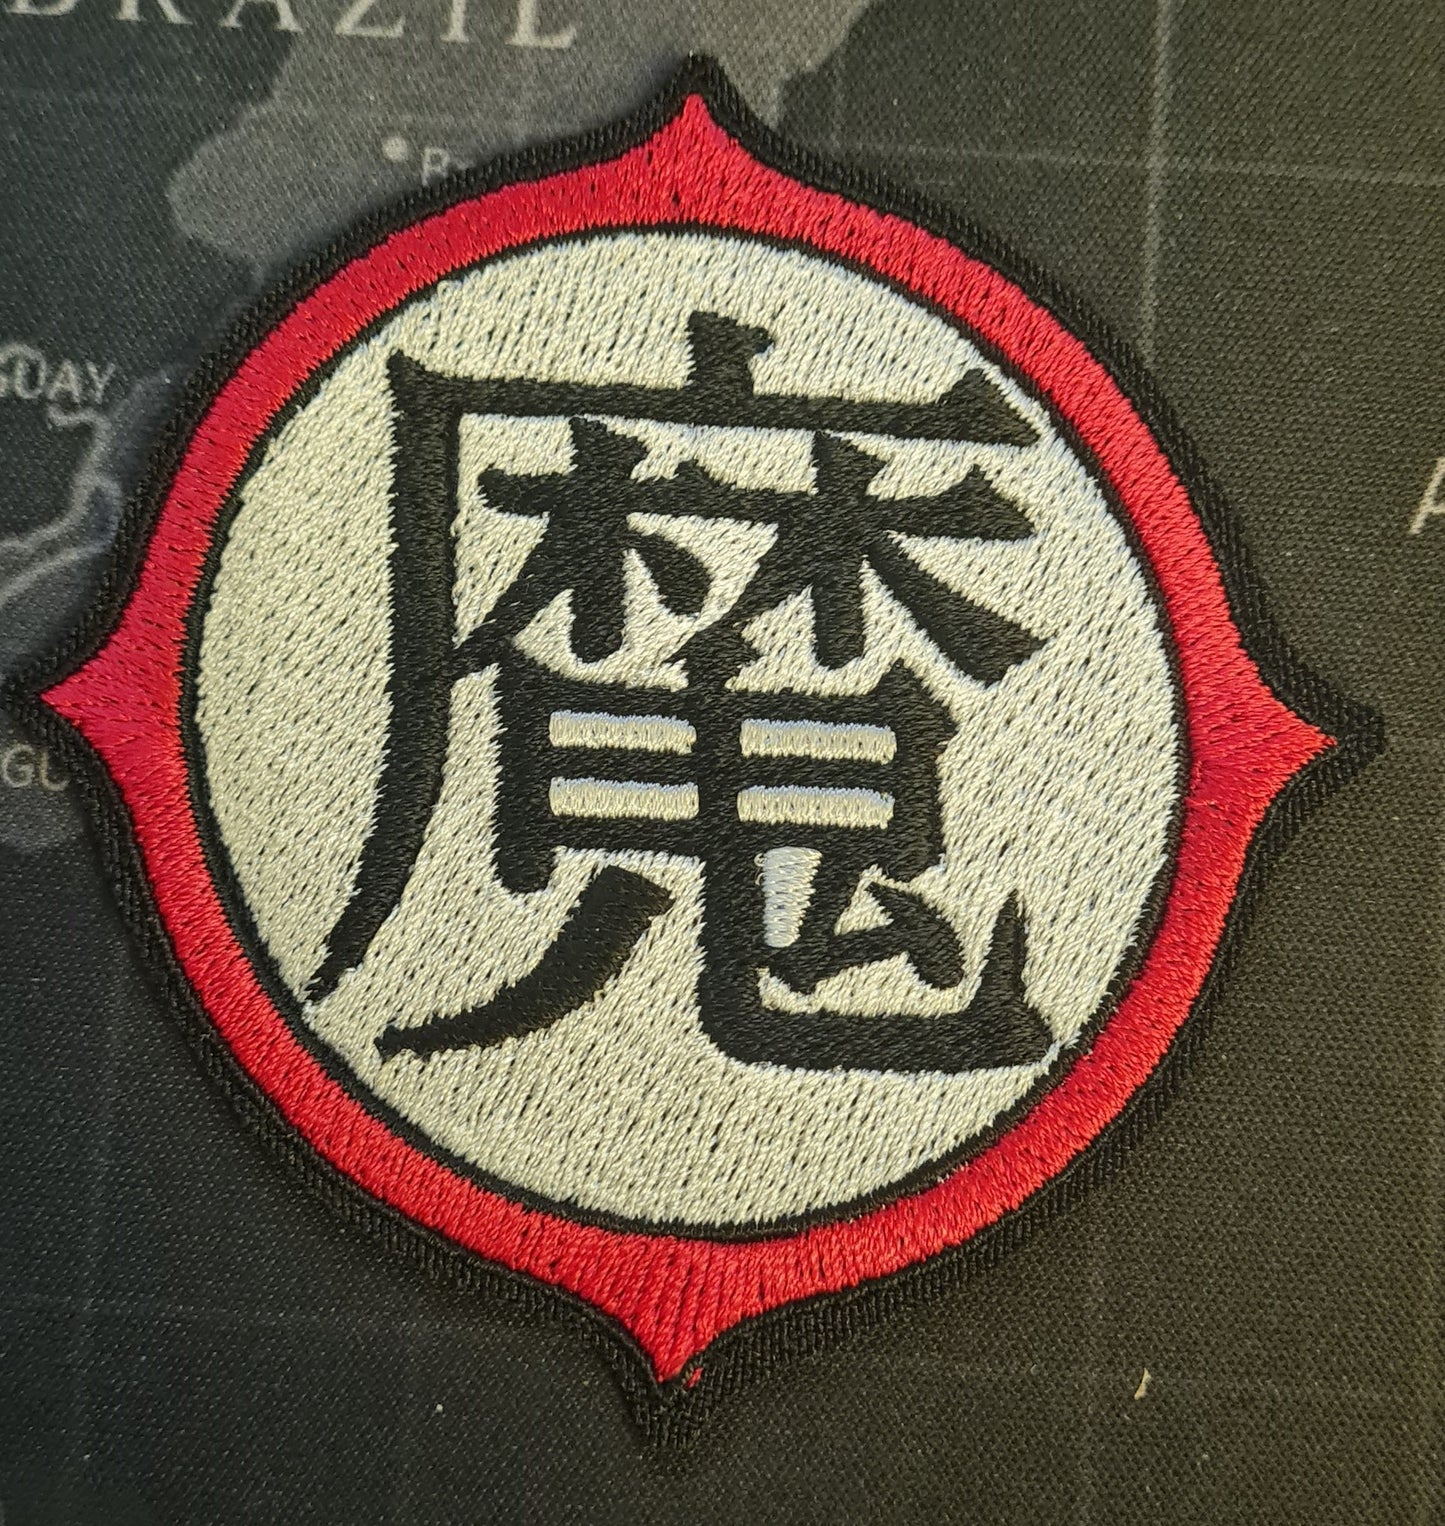 Dragonball Z, King Vegeta, Saiyan Warrior Class, Anime Embroidered Heat seal Patches.